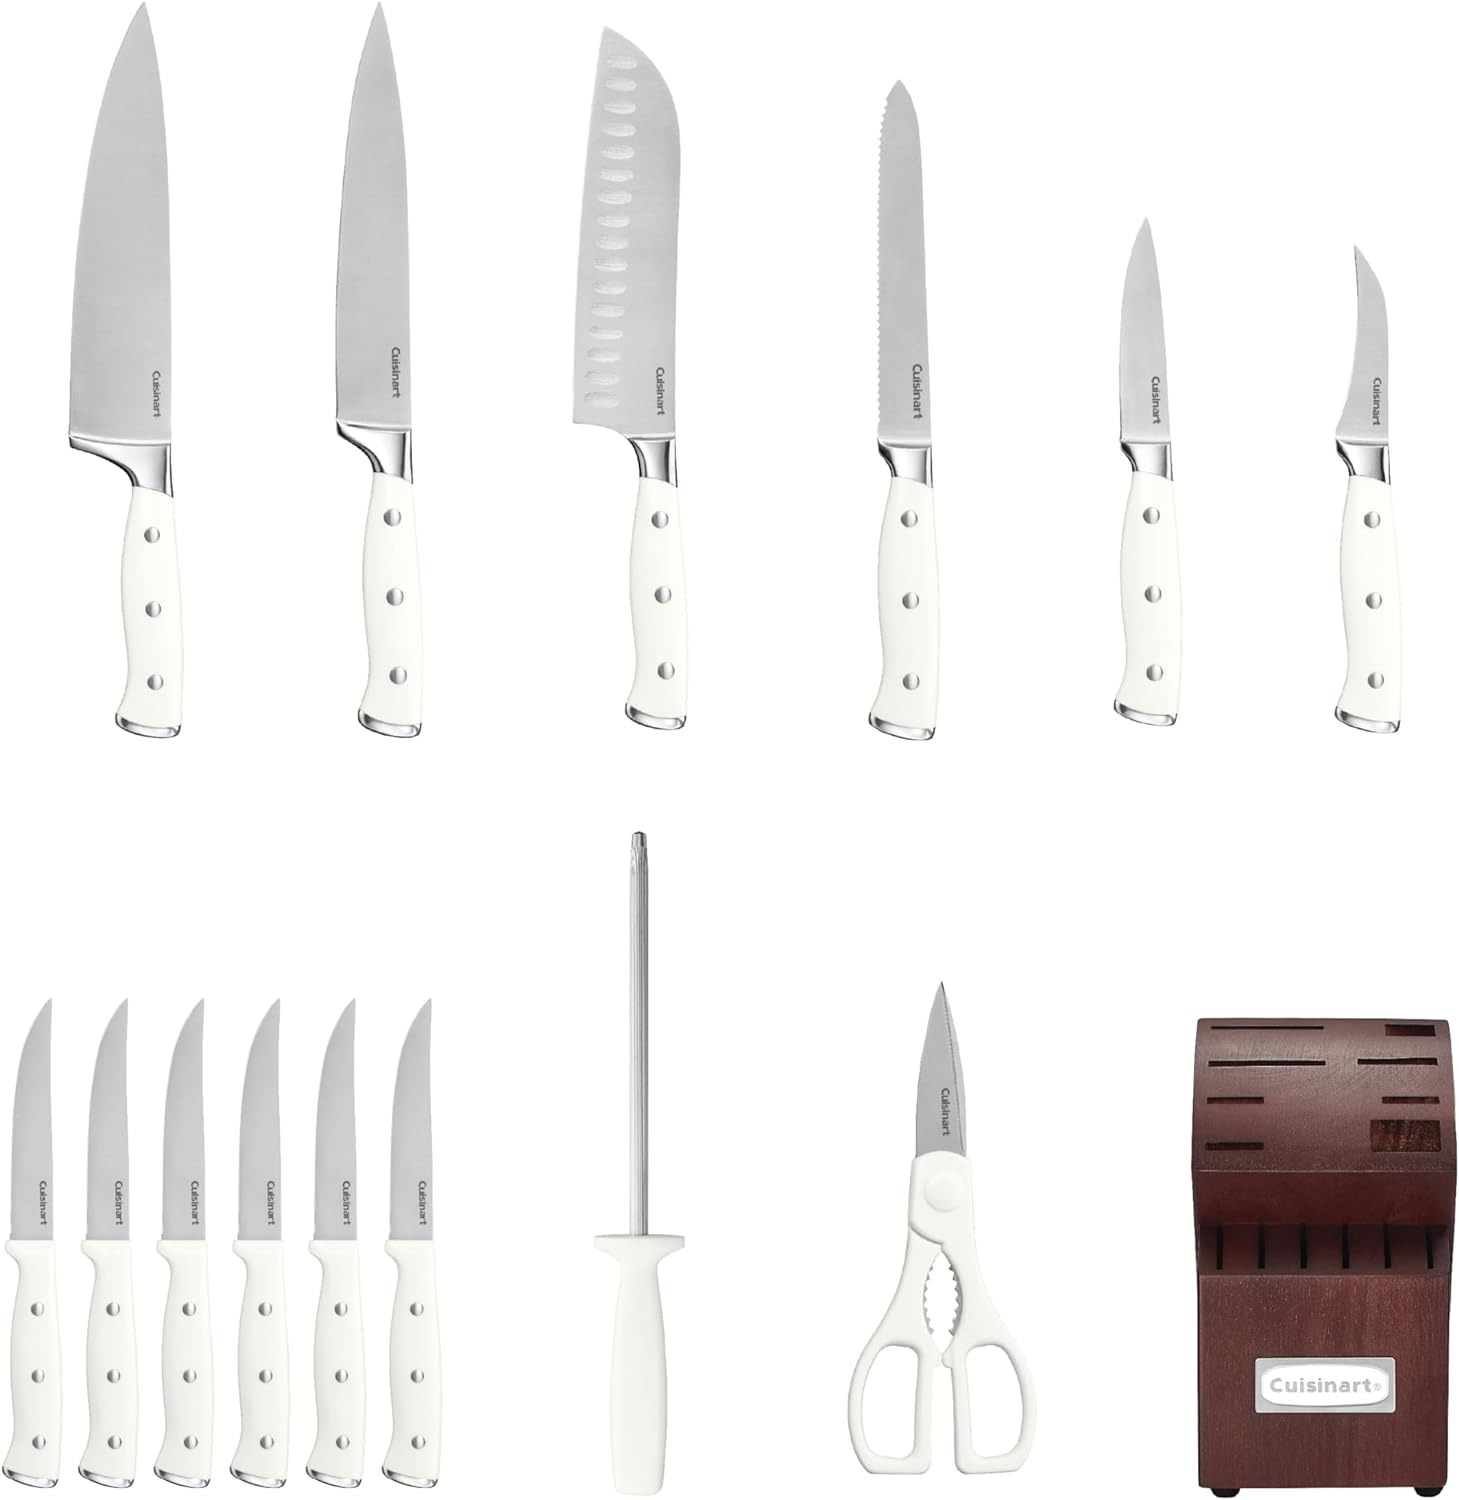 Cuisinart Knife Set Review